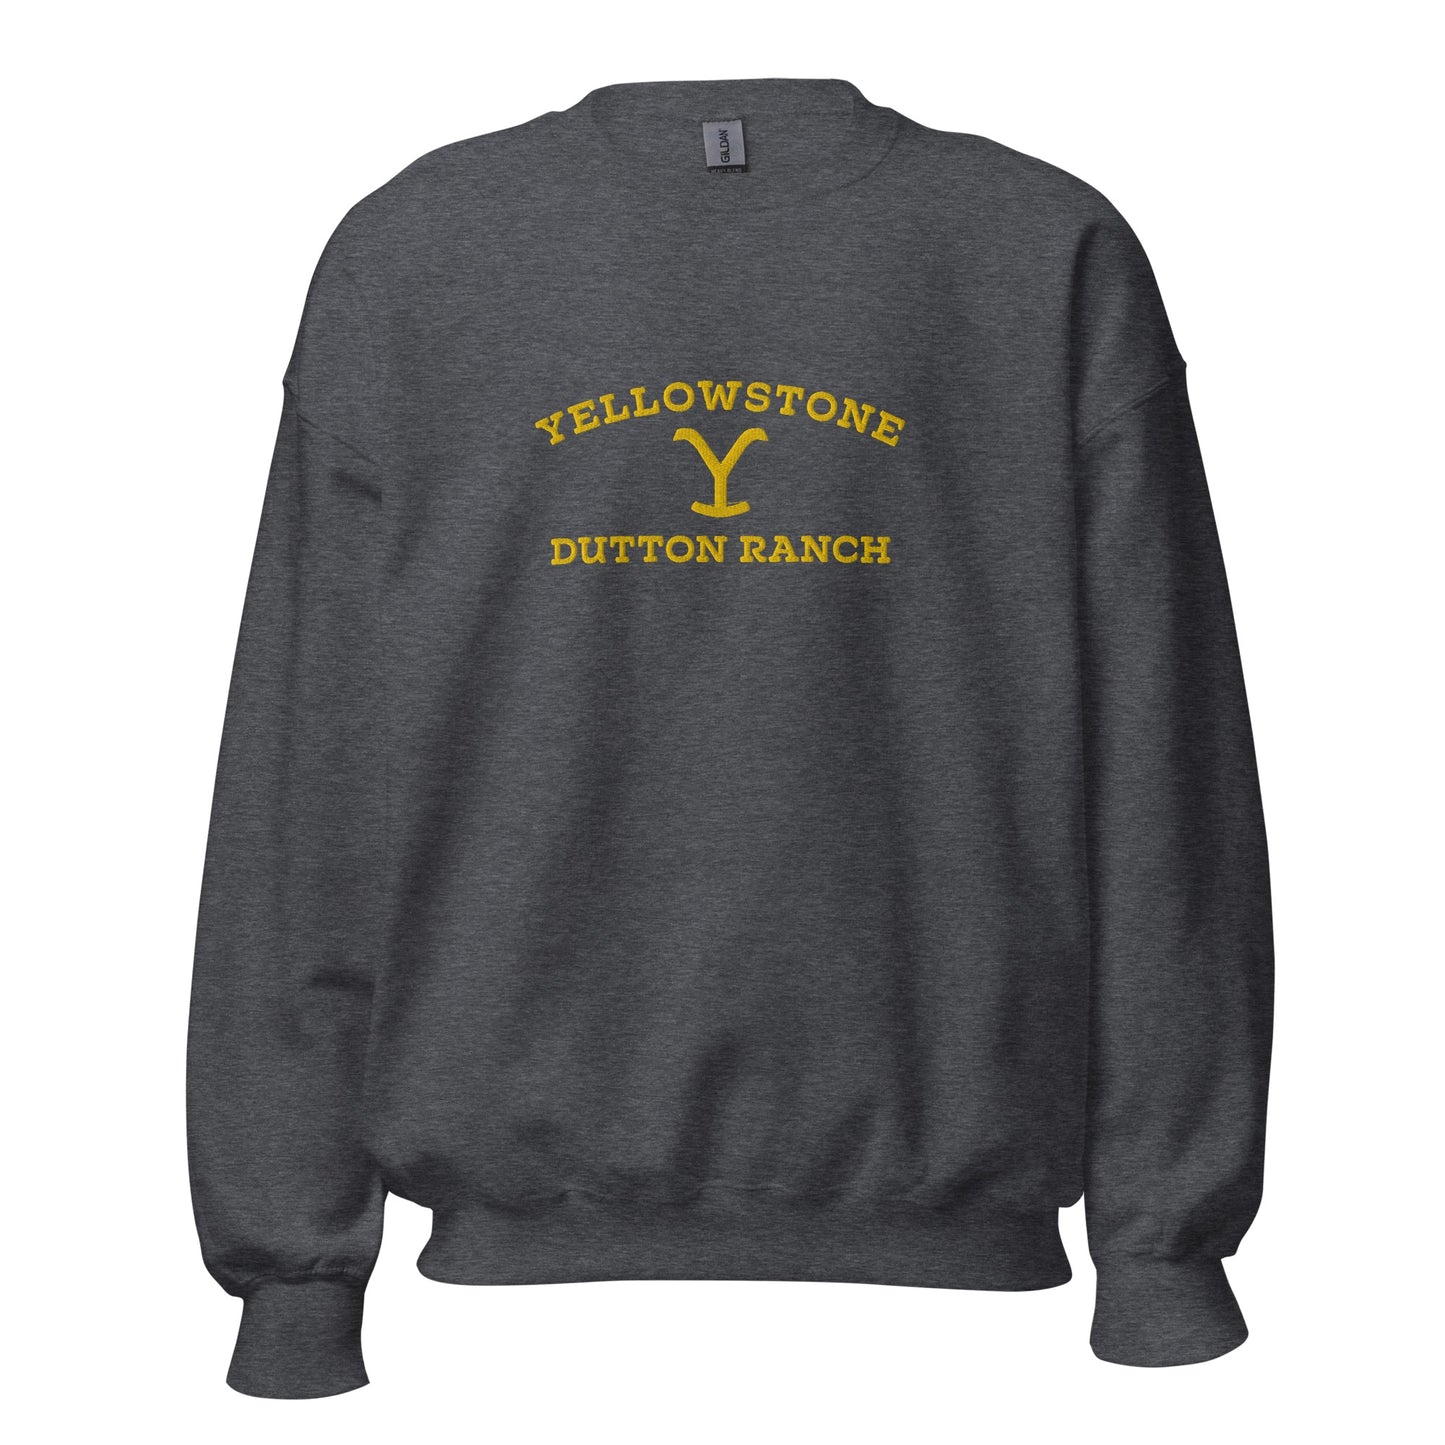 Yellowstone Dutton Ranch Embroidered Sweatshirt